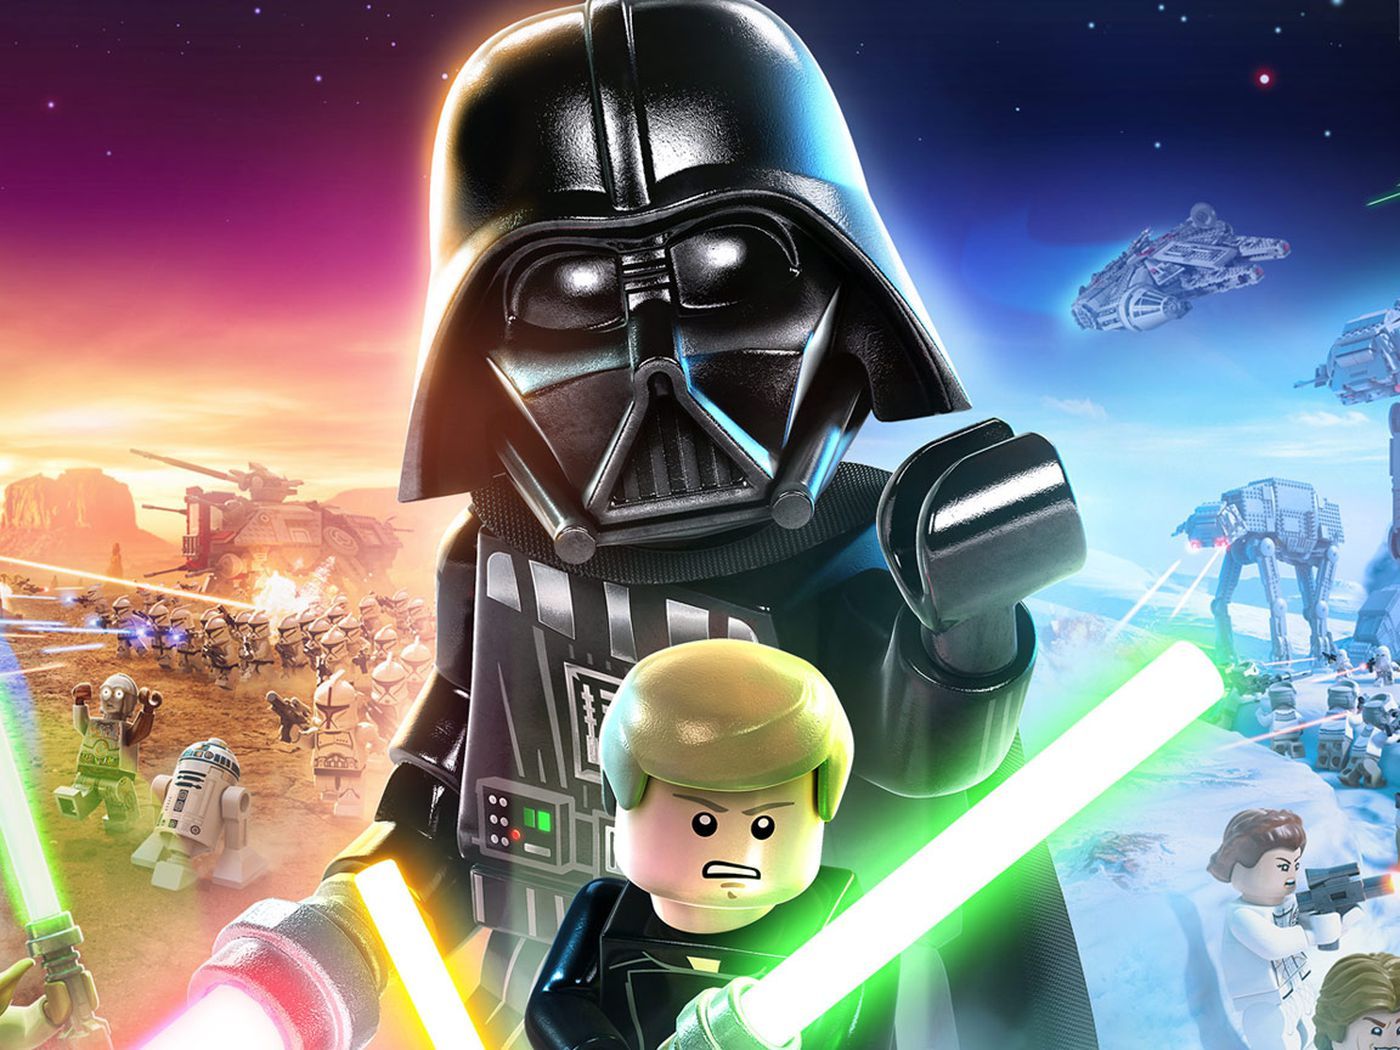 Lego Star Wars: The Skywalker Saga for PS Nintendo Switch delayed